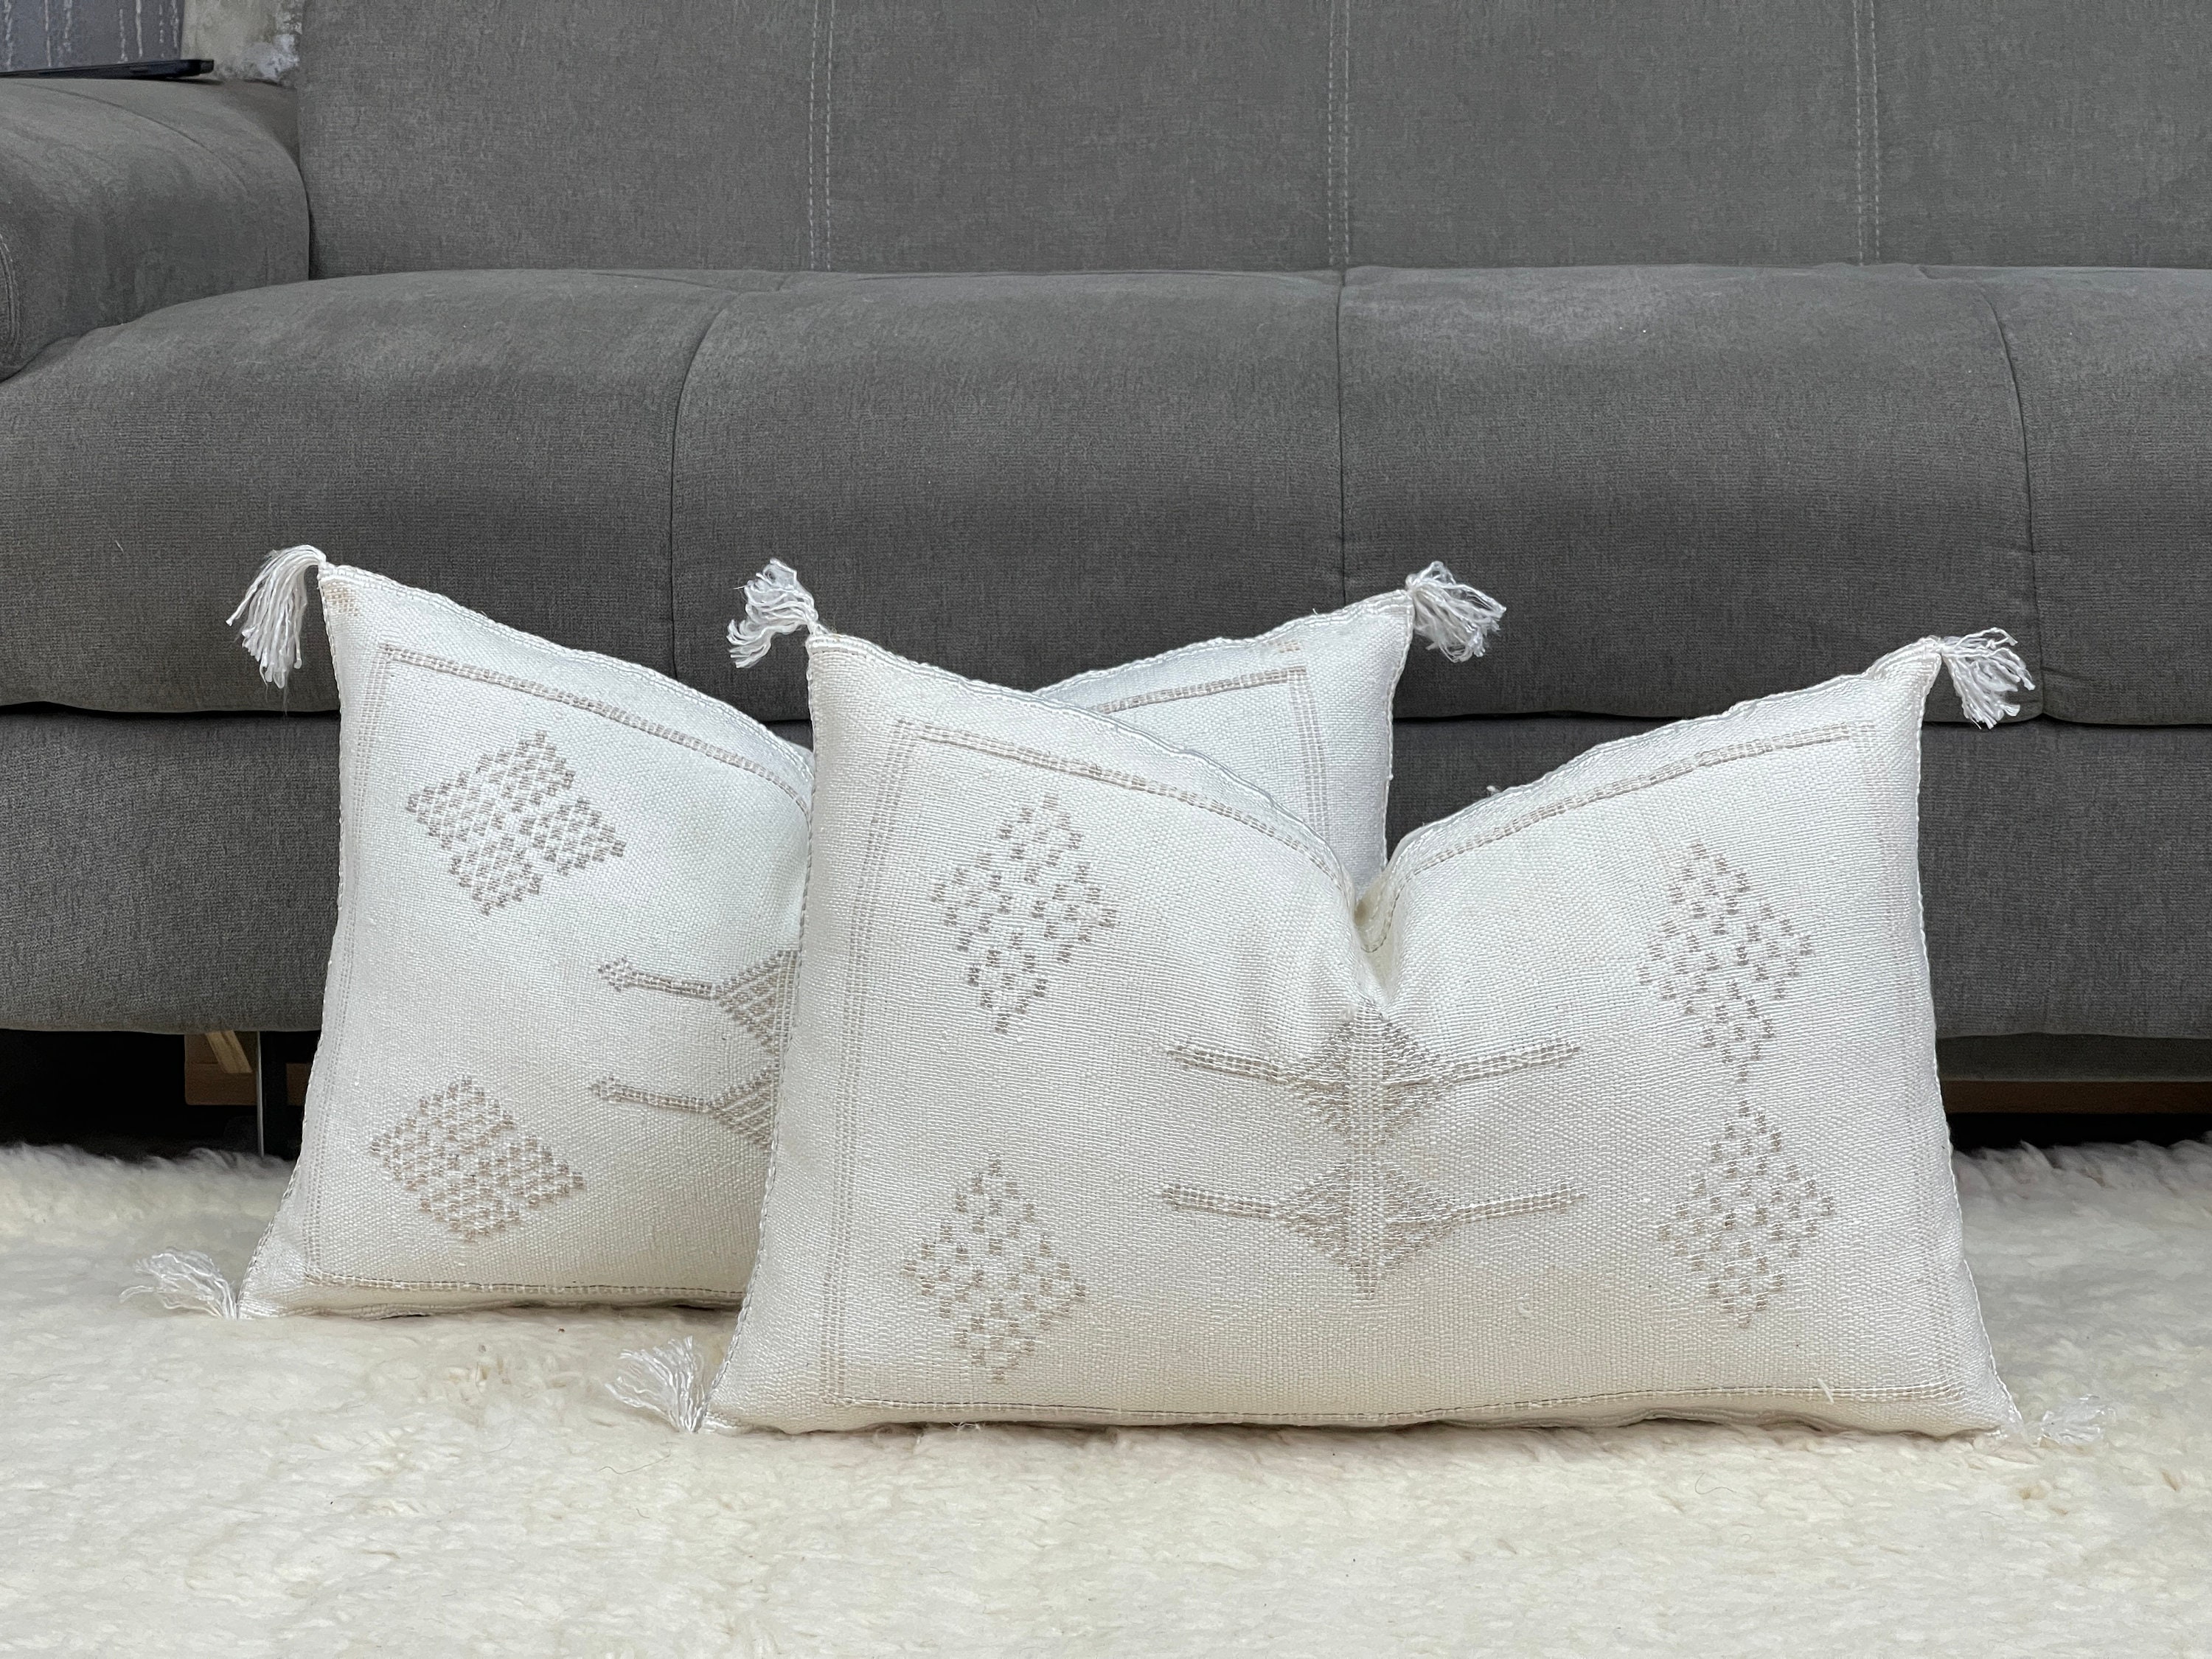 Moroccan Pillow - Lumbar Thick-n-Thin - Saraya - Black & Grey